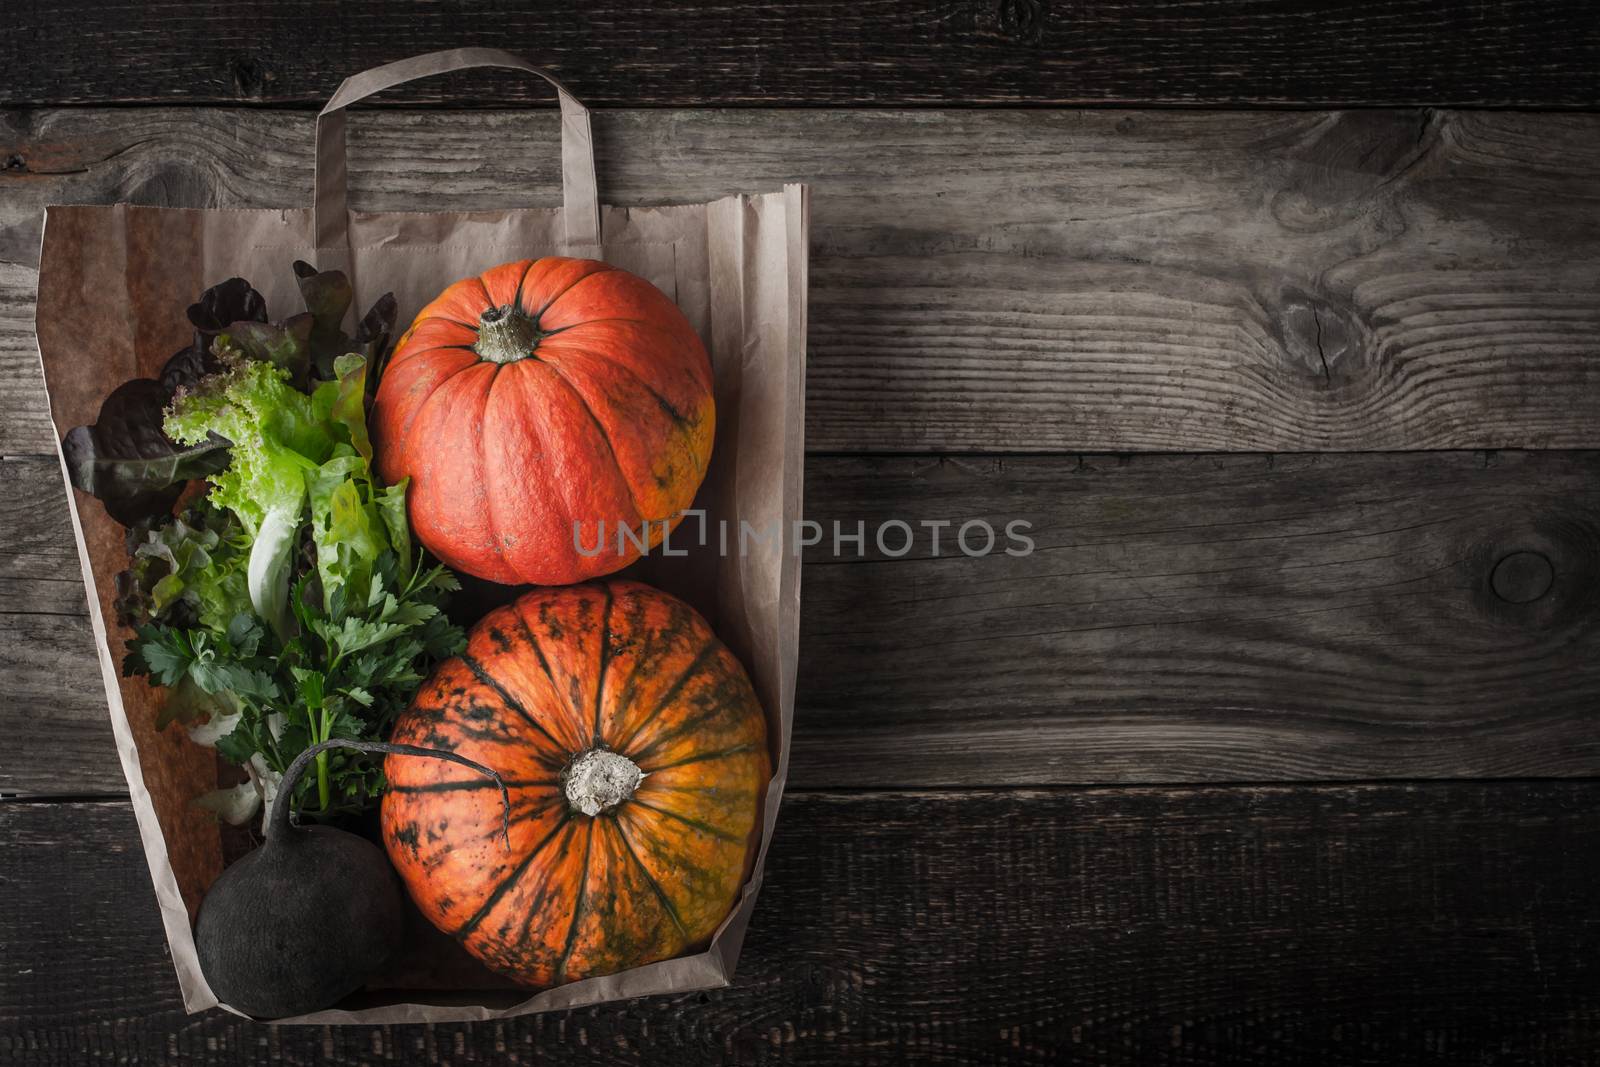 Pumpkins , turnip and greens inside a paper by Deniskarpenkov